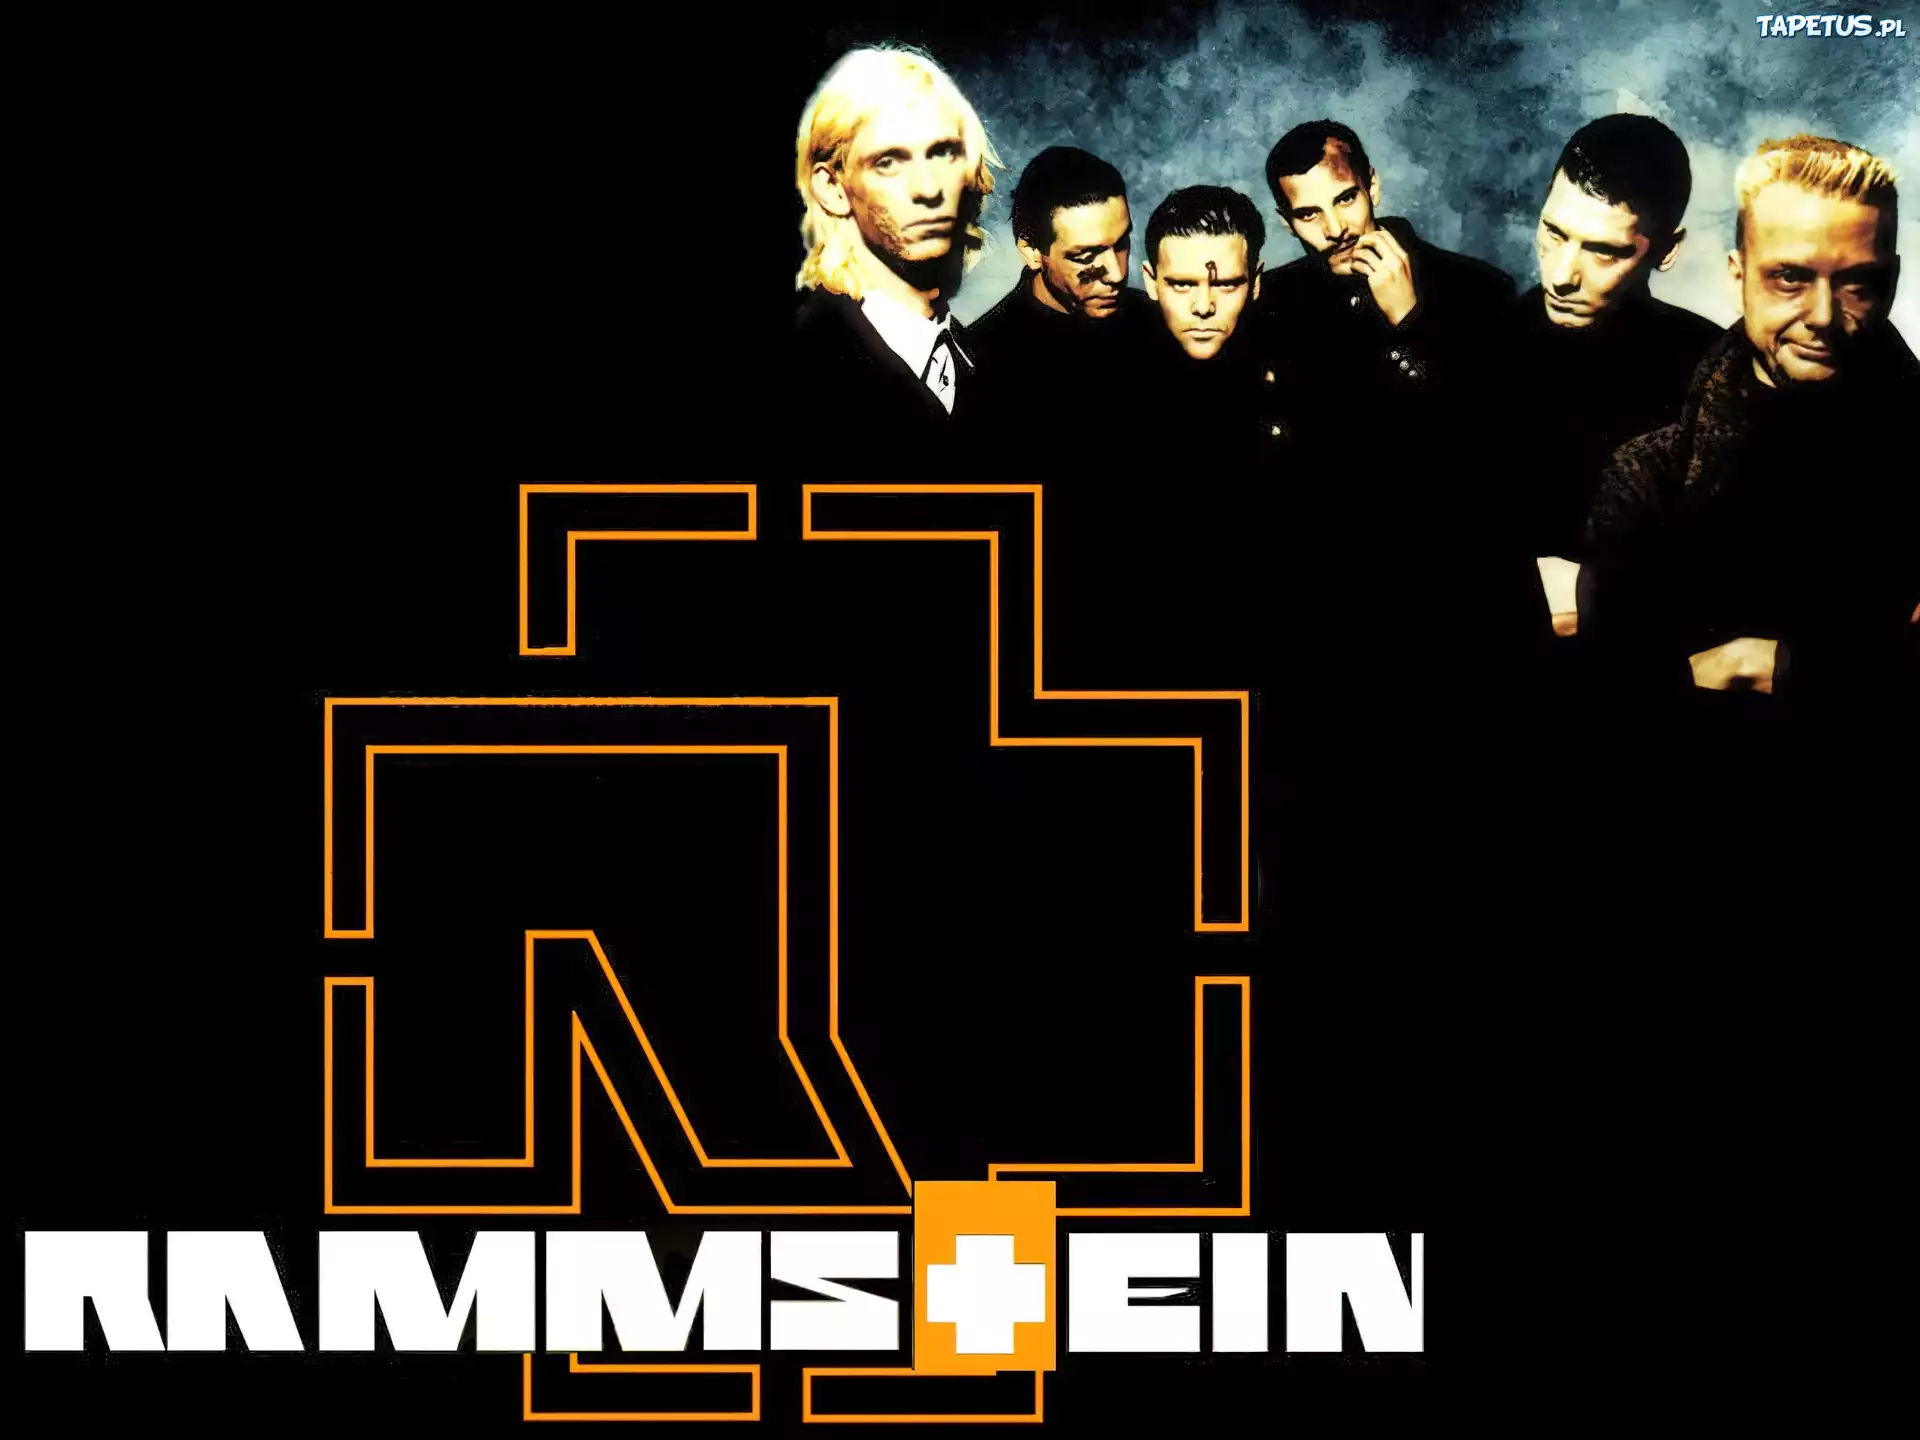 Сборник песен рамштайн. Группа Rammstein. Rammstein логотип группы. Rammstein фото группы. Rammstein обои на рабочий стол.